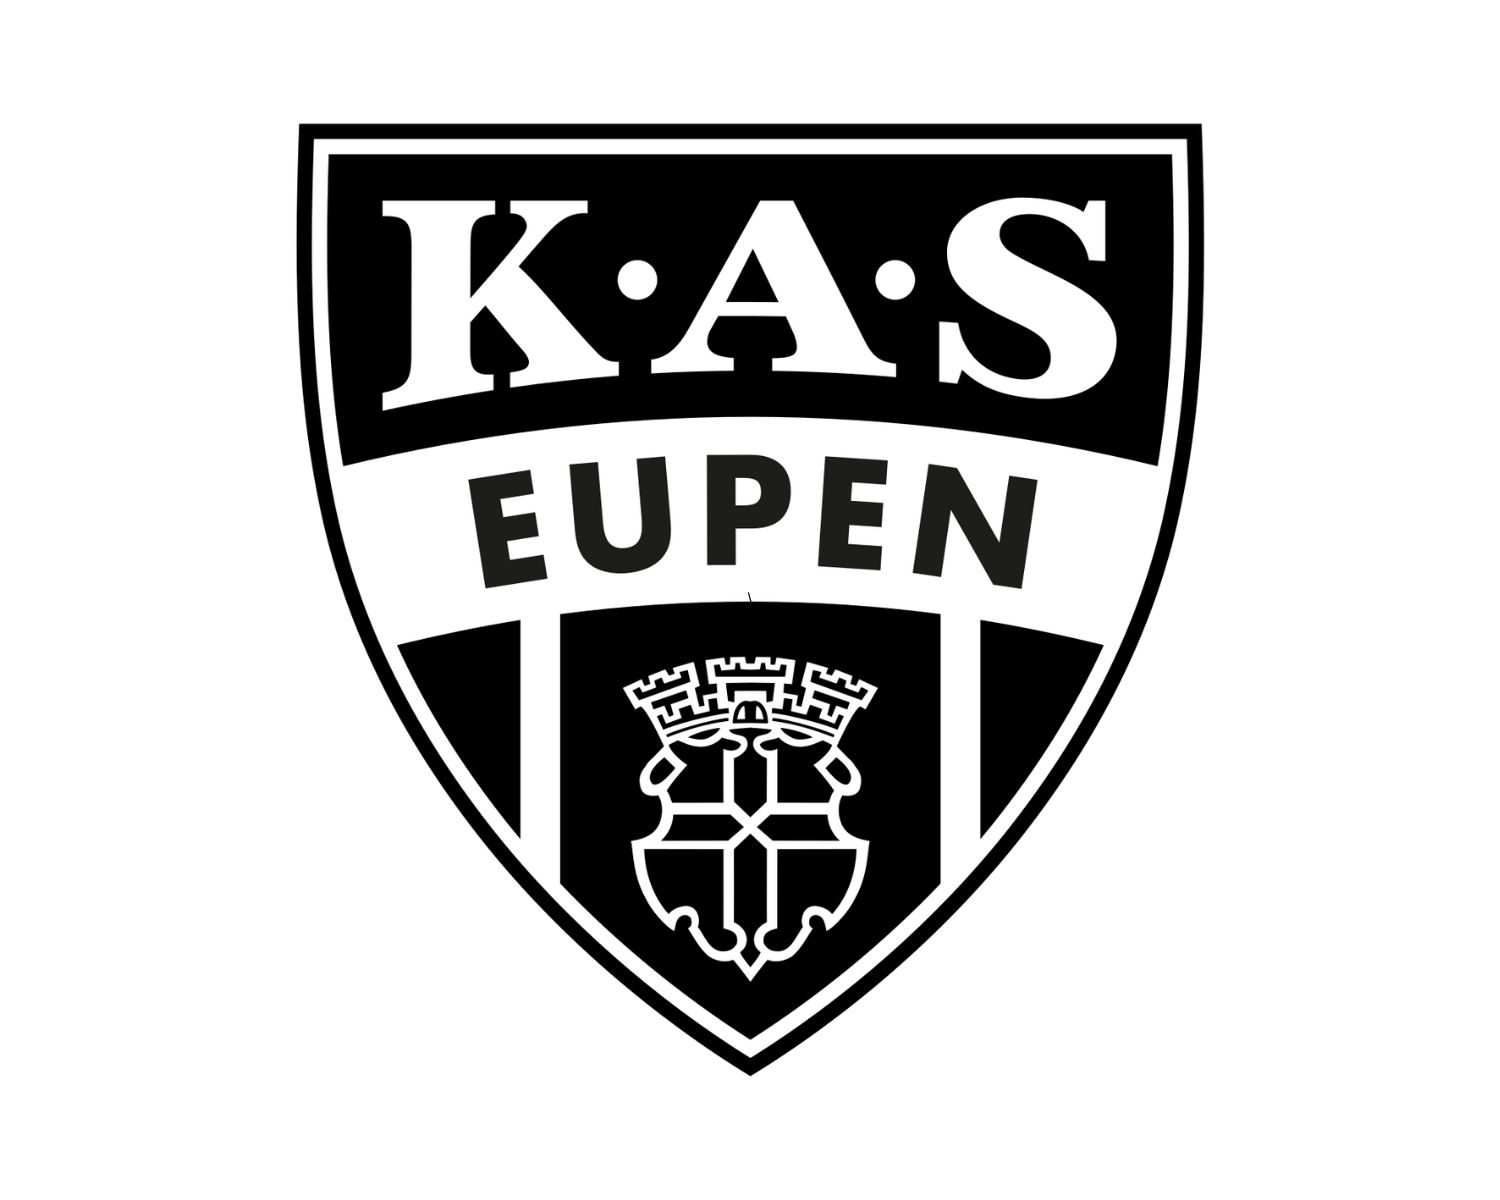 kas-eupen-23-football-club-facts